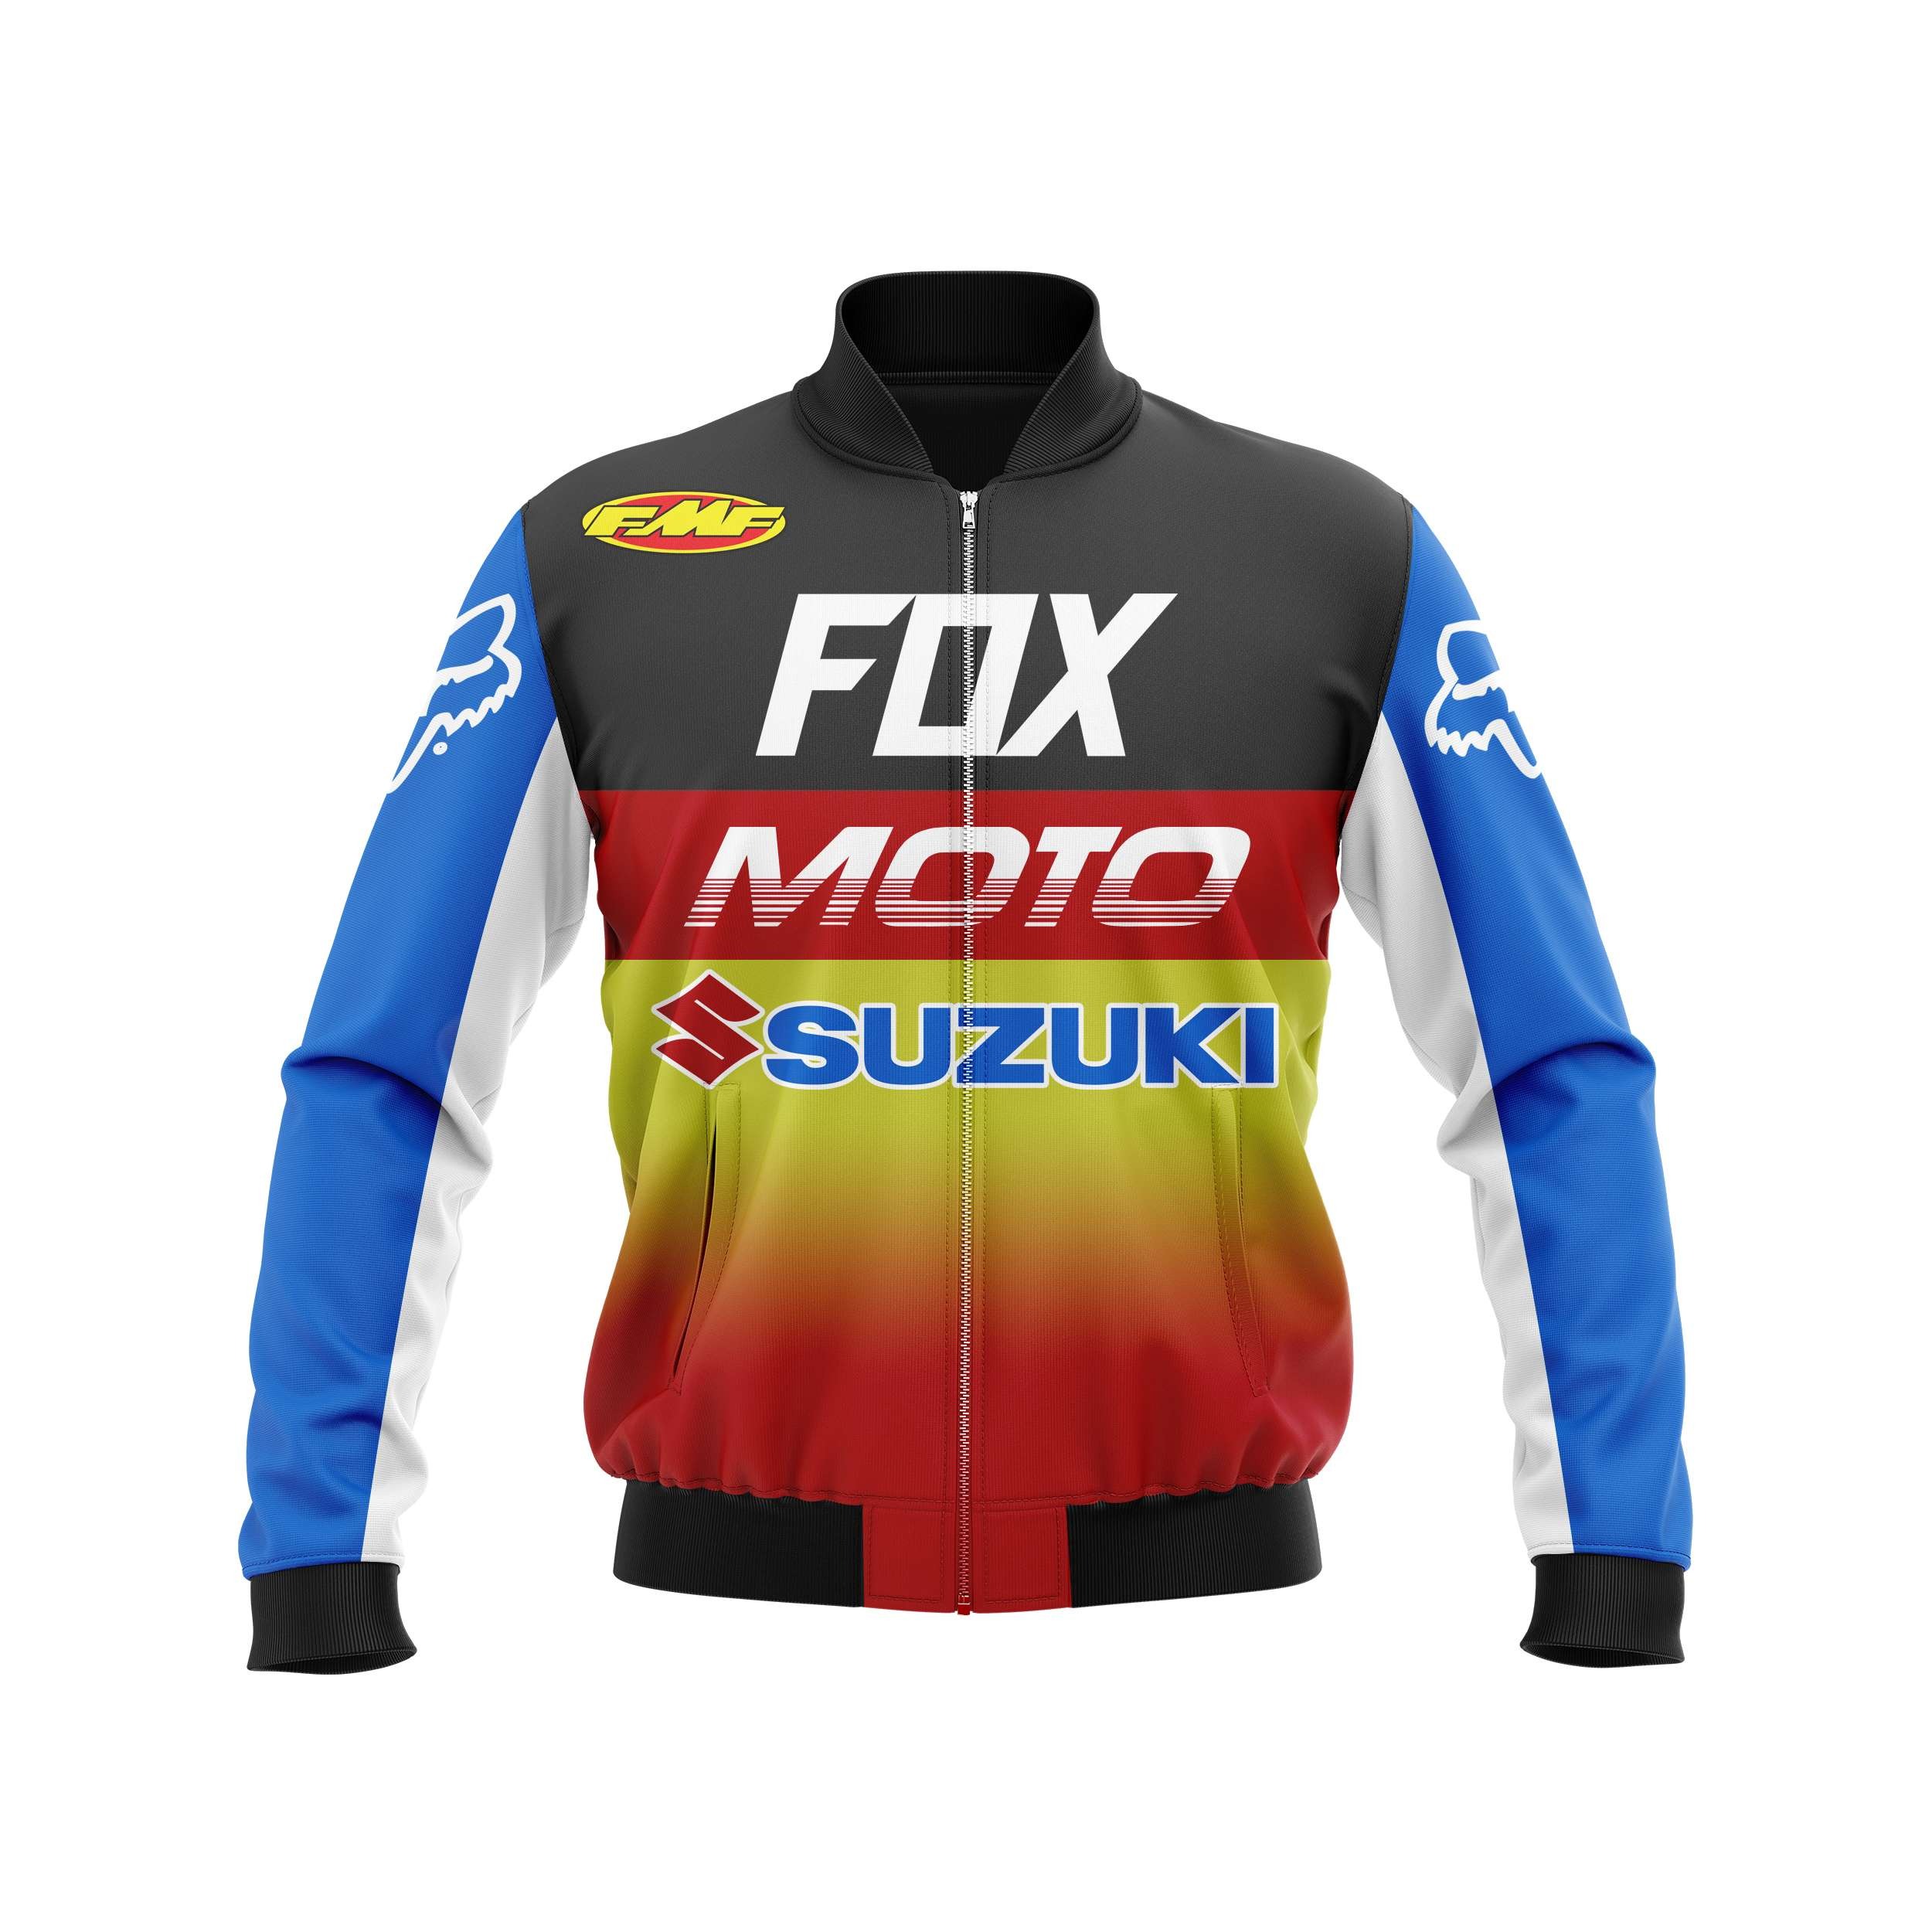 Fox moto suzuki custom name 3d hoodies